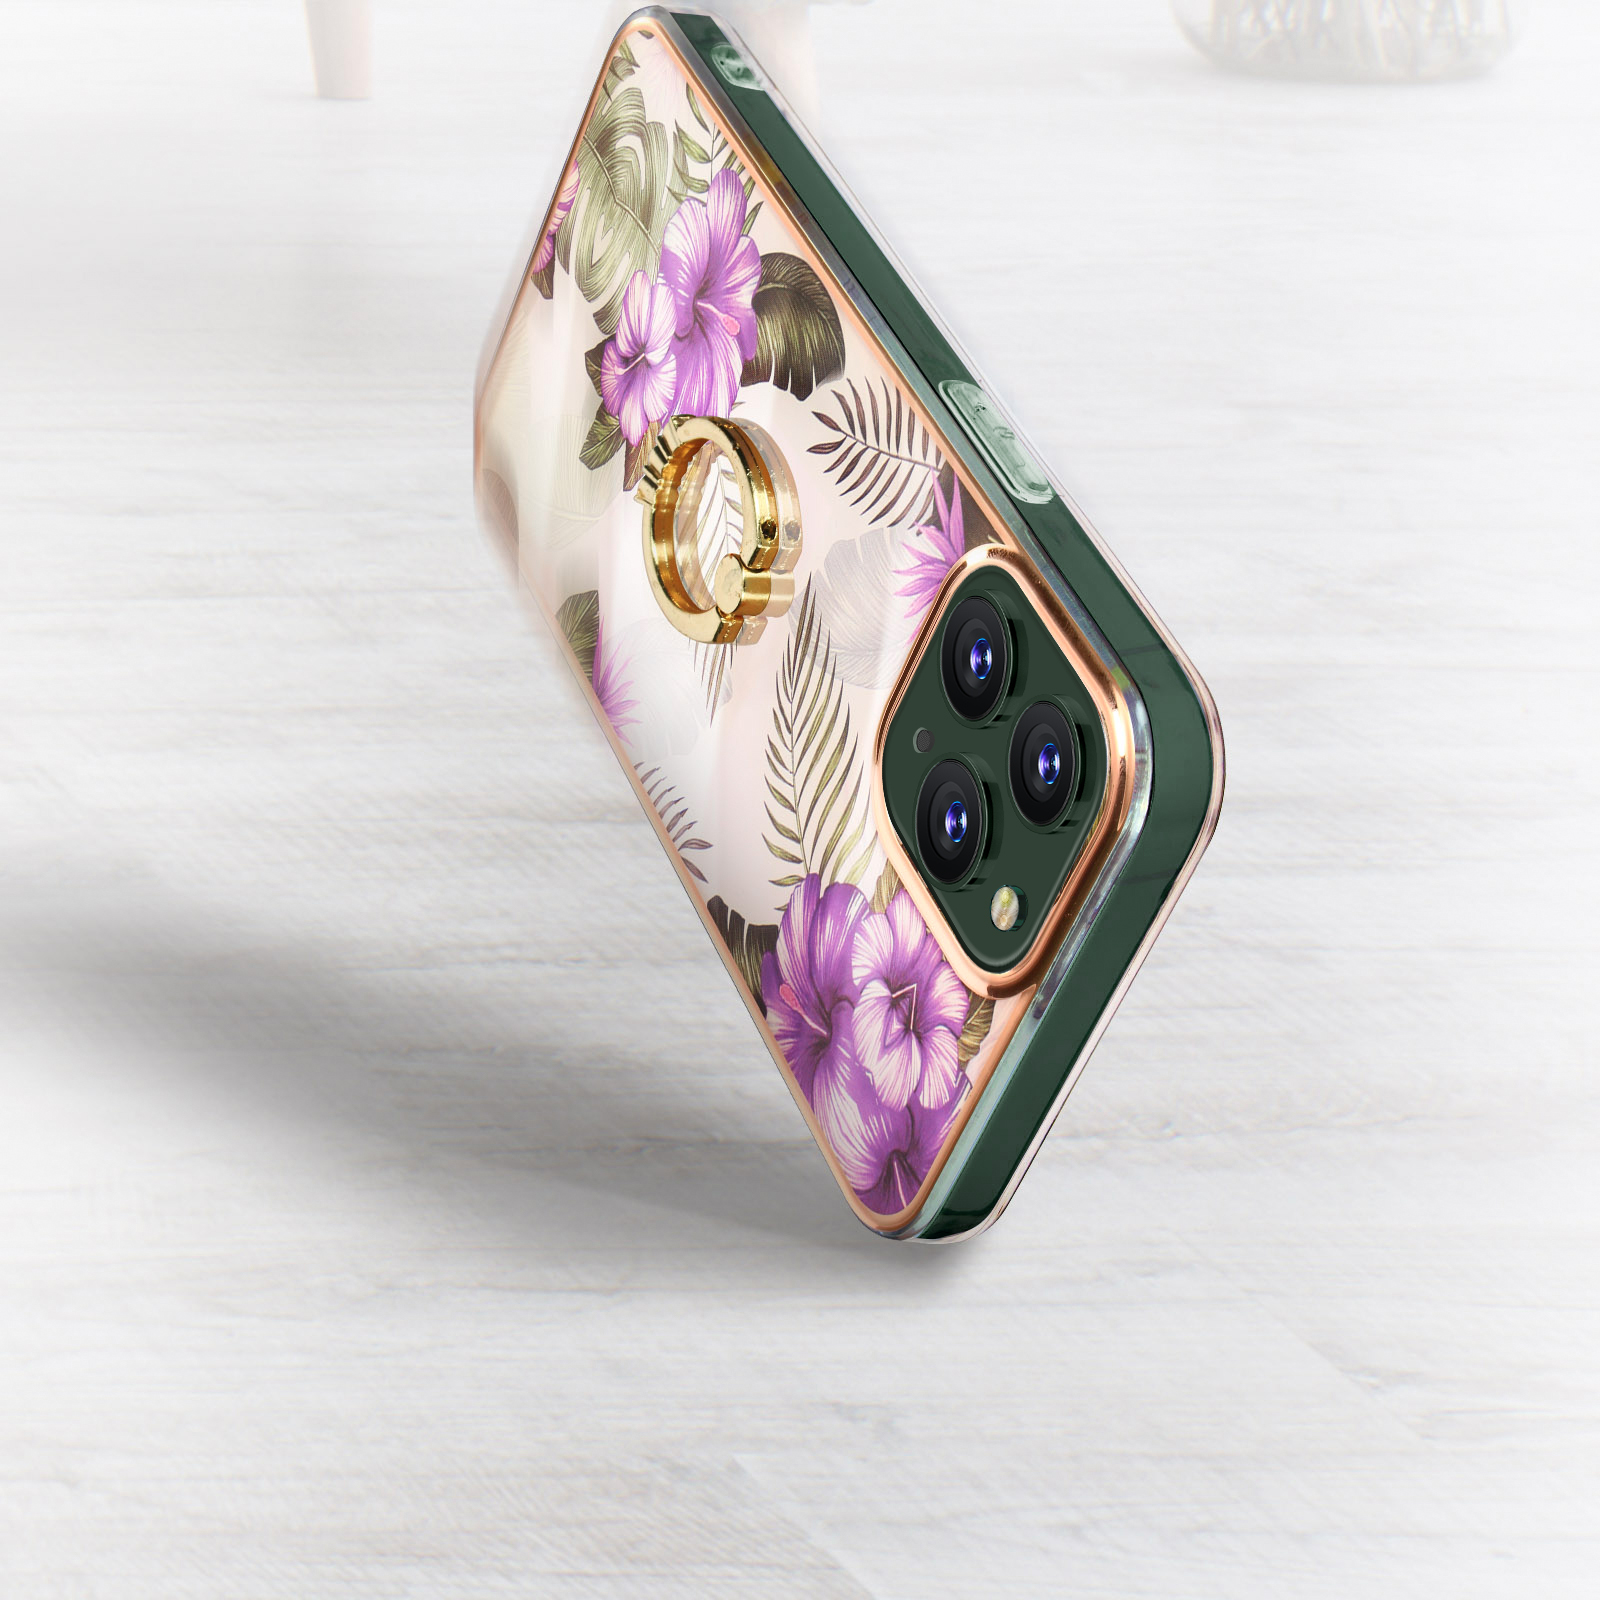 AVIZAR Blumen Series, 11 Apple, Violett Pro, iPhone Backcover